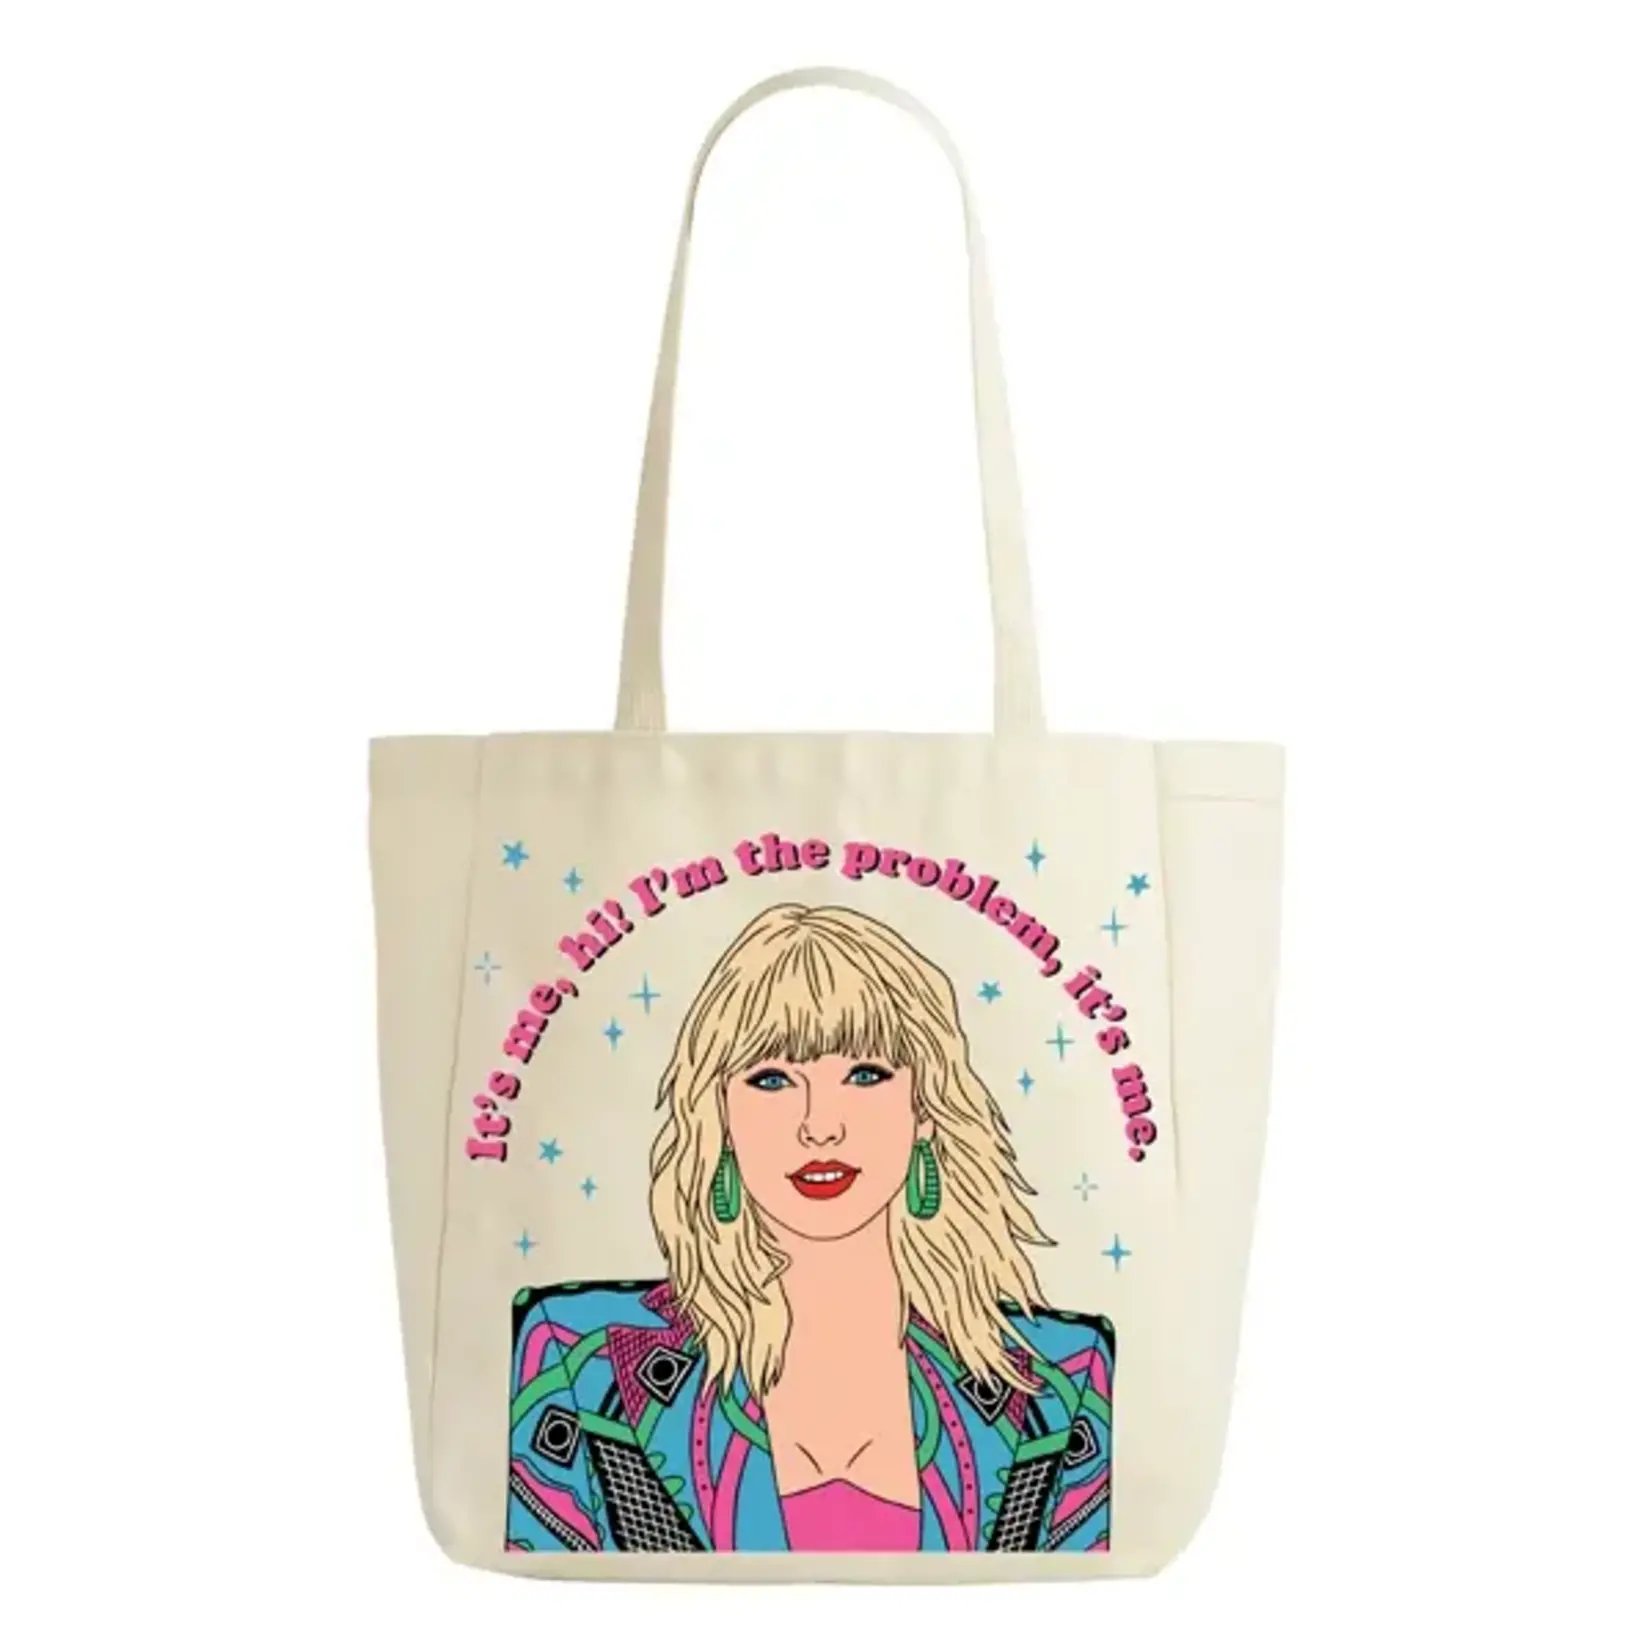 Taylor Swift "It's Me, Hi!" Tote Bag